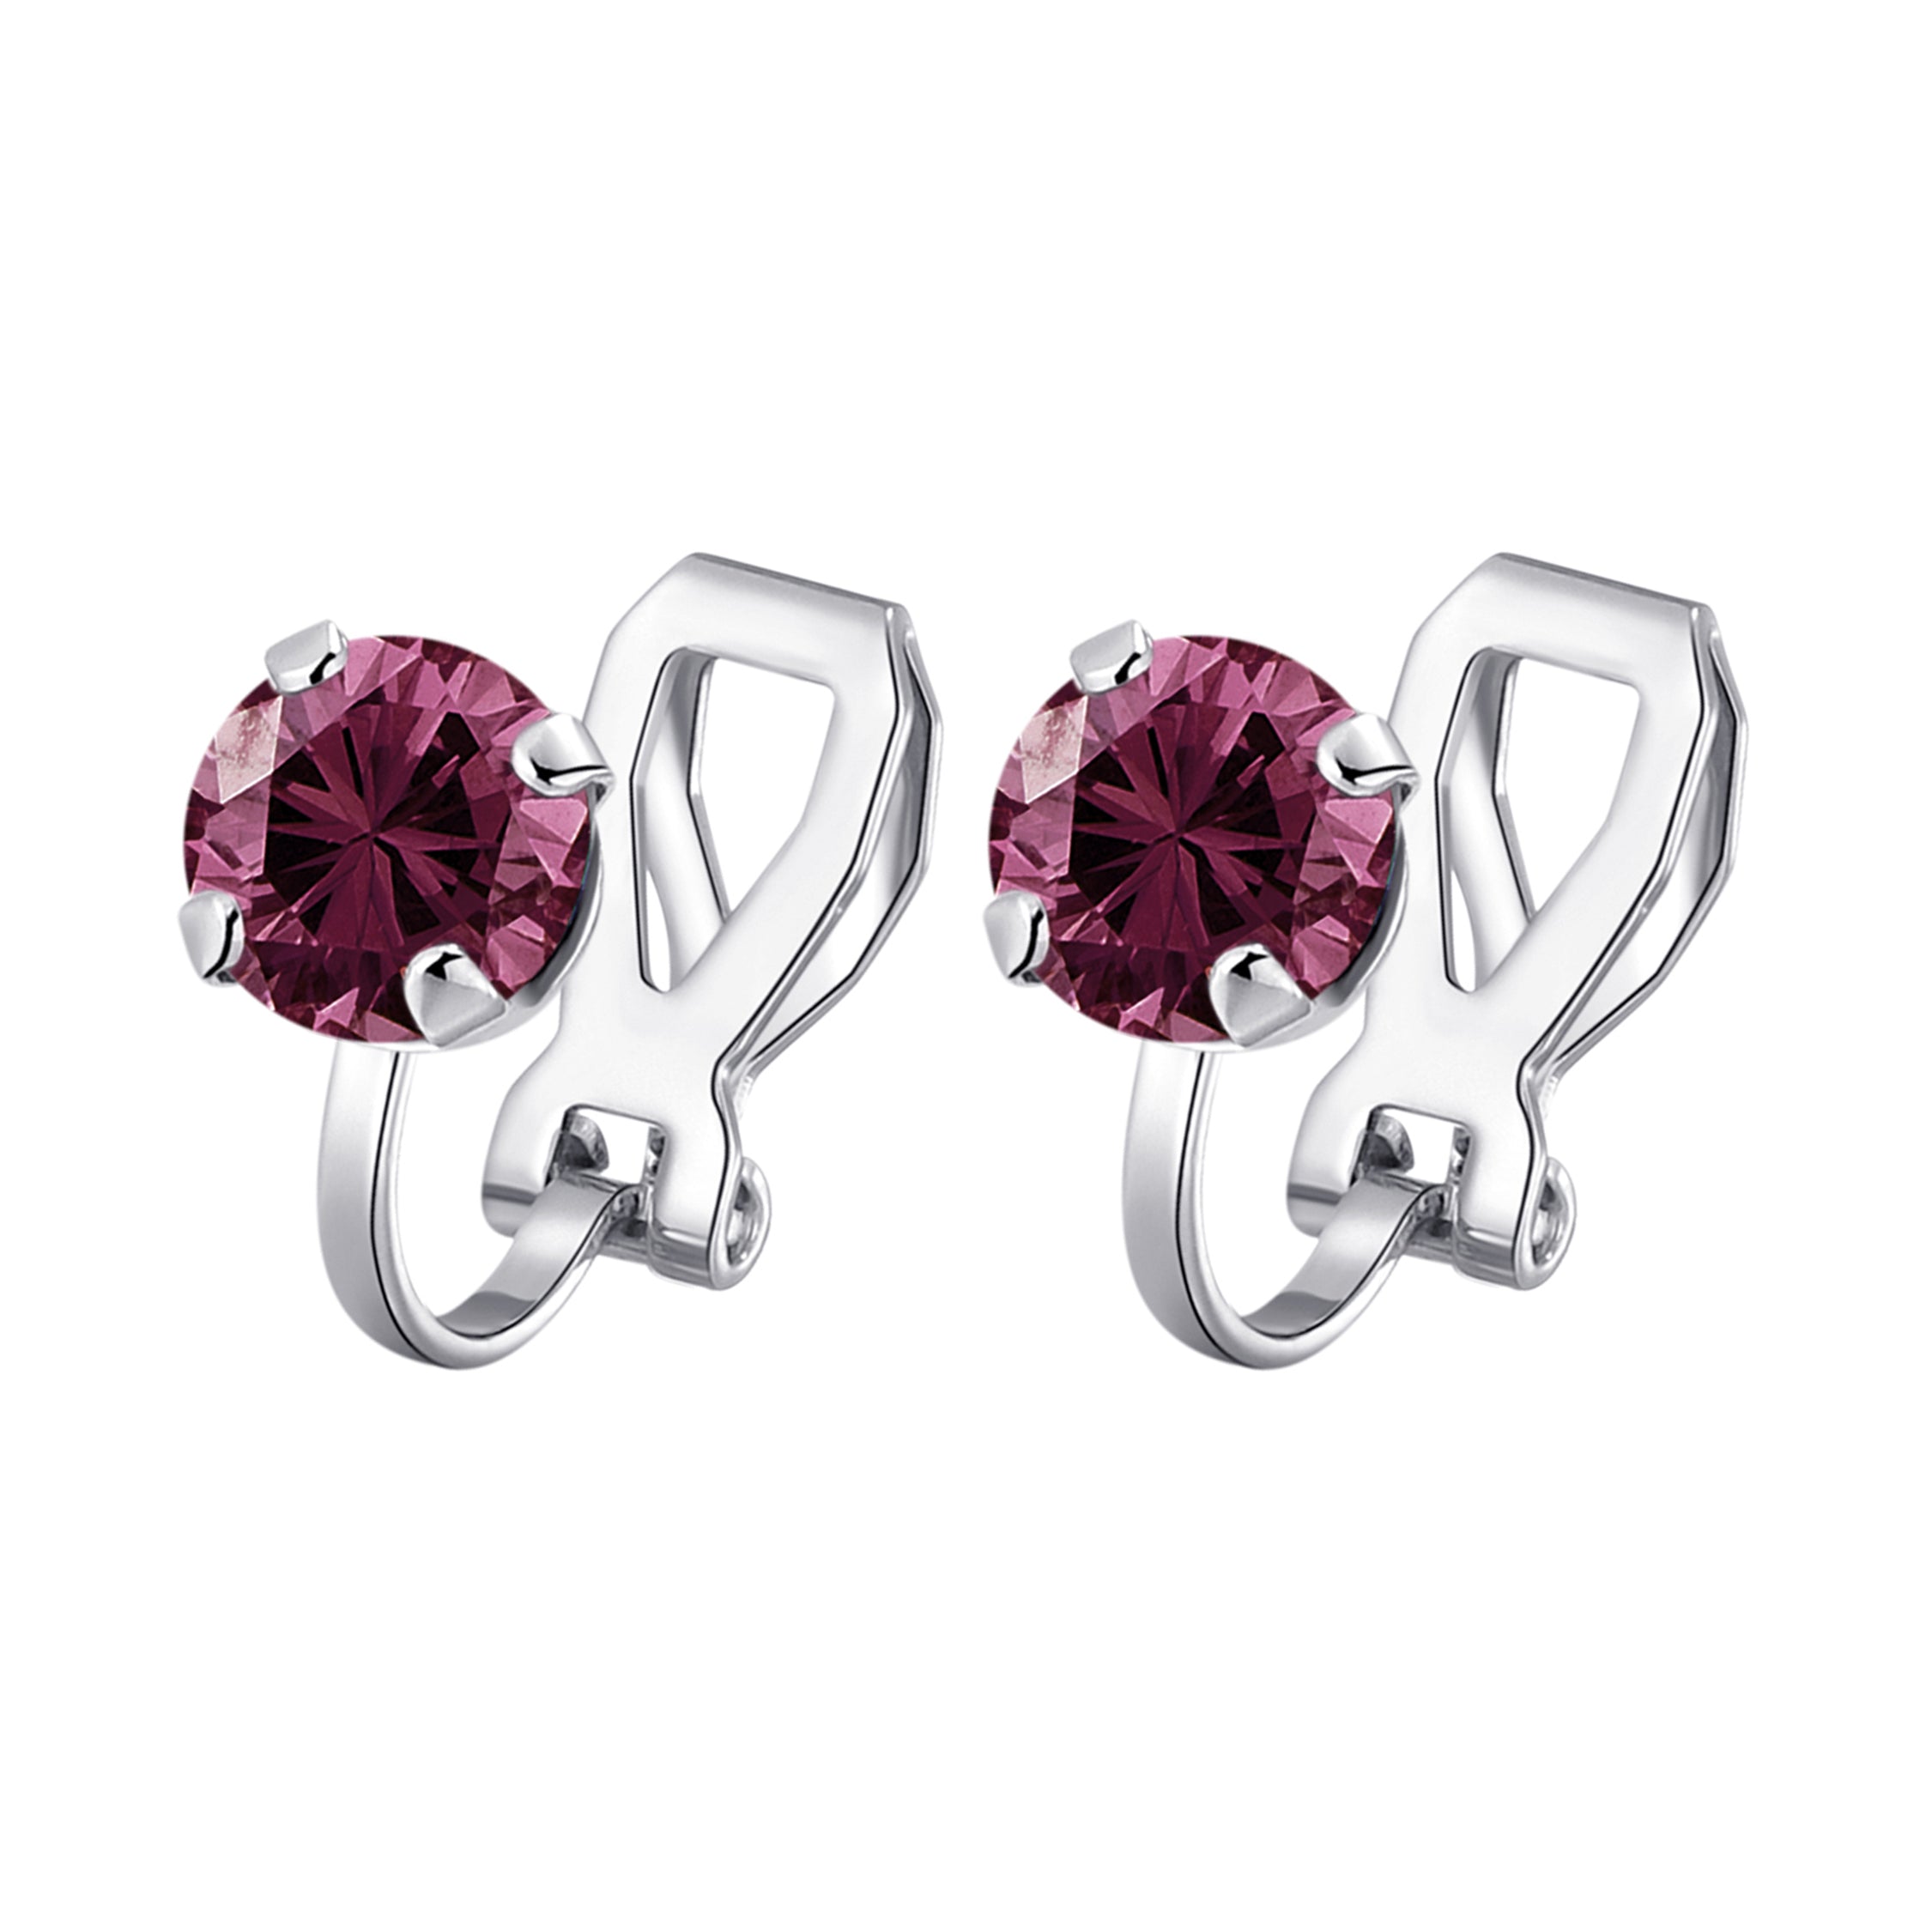 Purple Crystal Clip On Earrings Created with Zircondia® Crystals by Philip Jones Jewellery